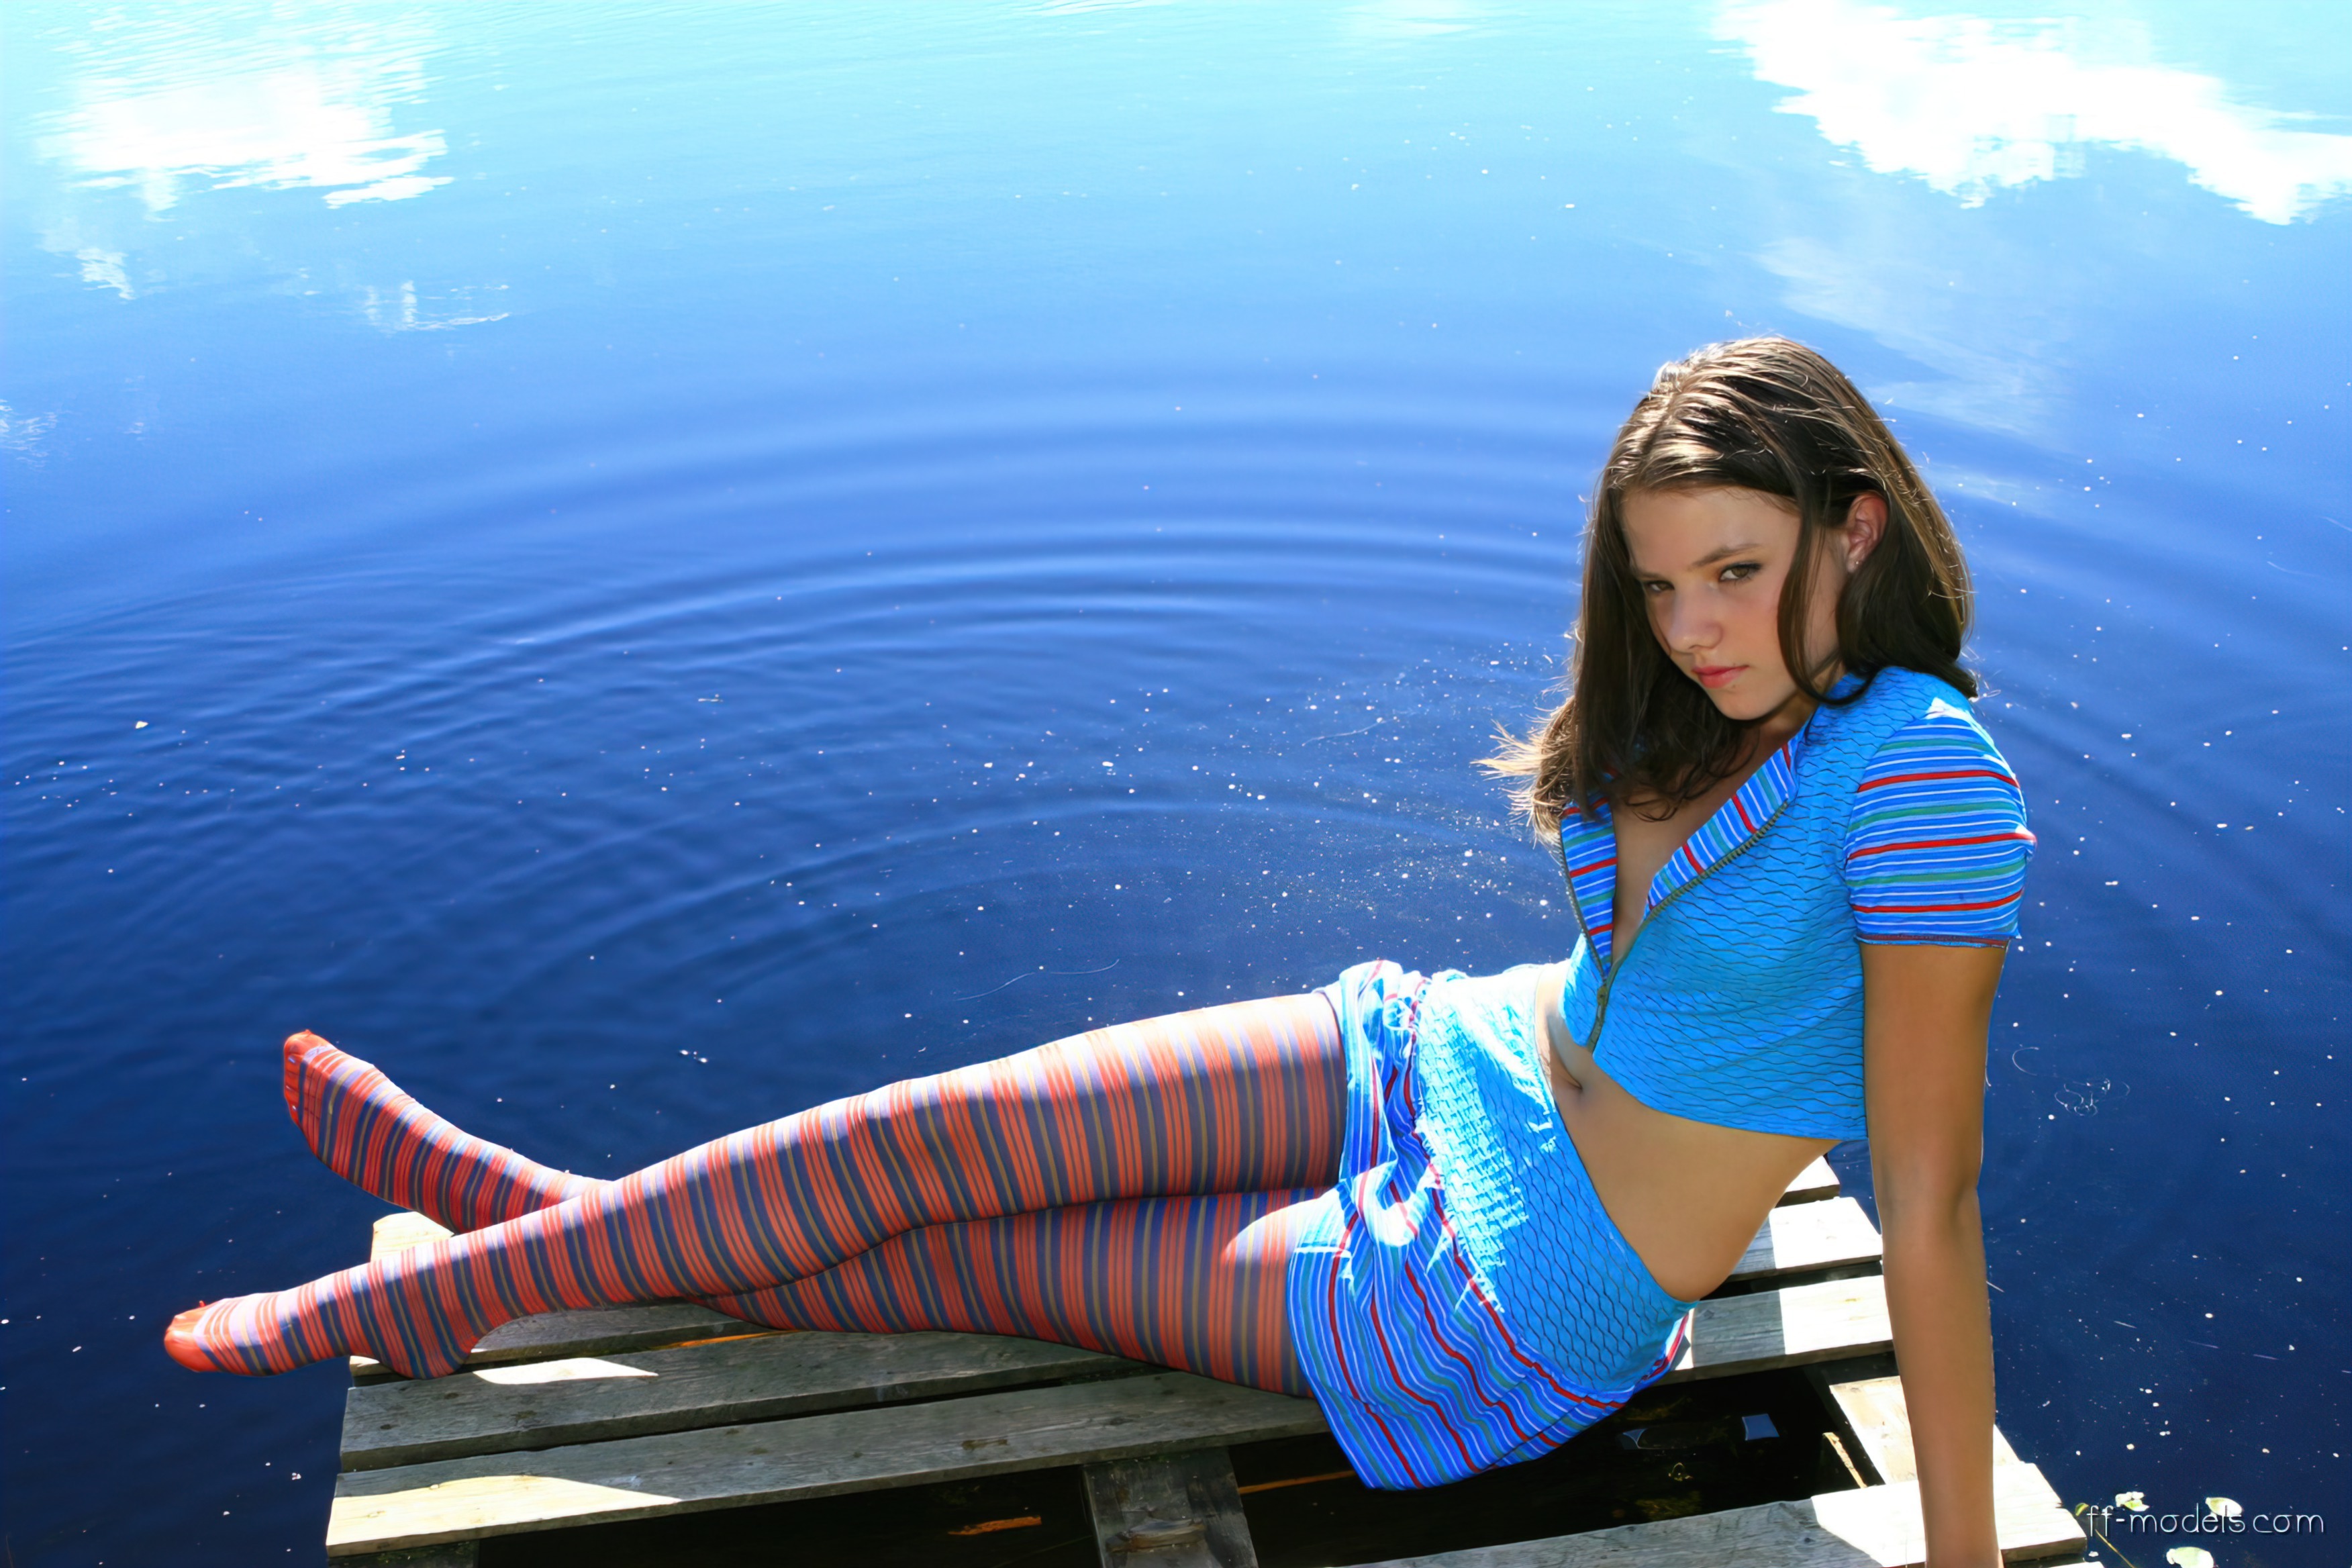 Sandra Orlow Women Model Women Outdoors Bare Midriff Striped Pantyhose Red Pantyhose Lake 6271